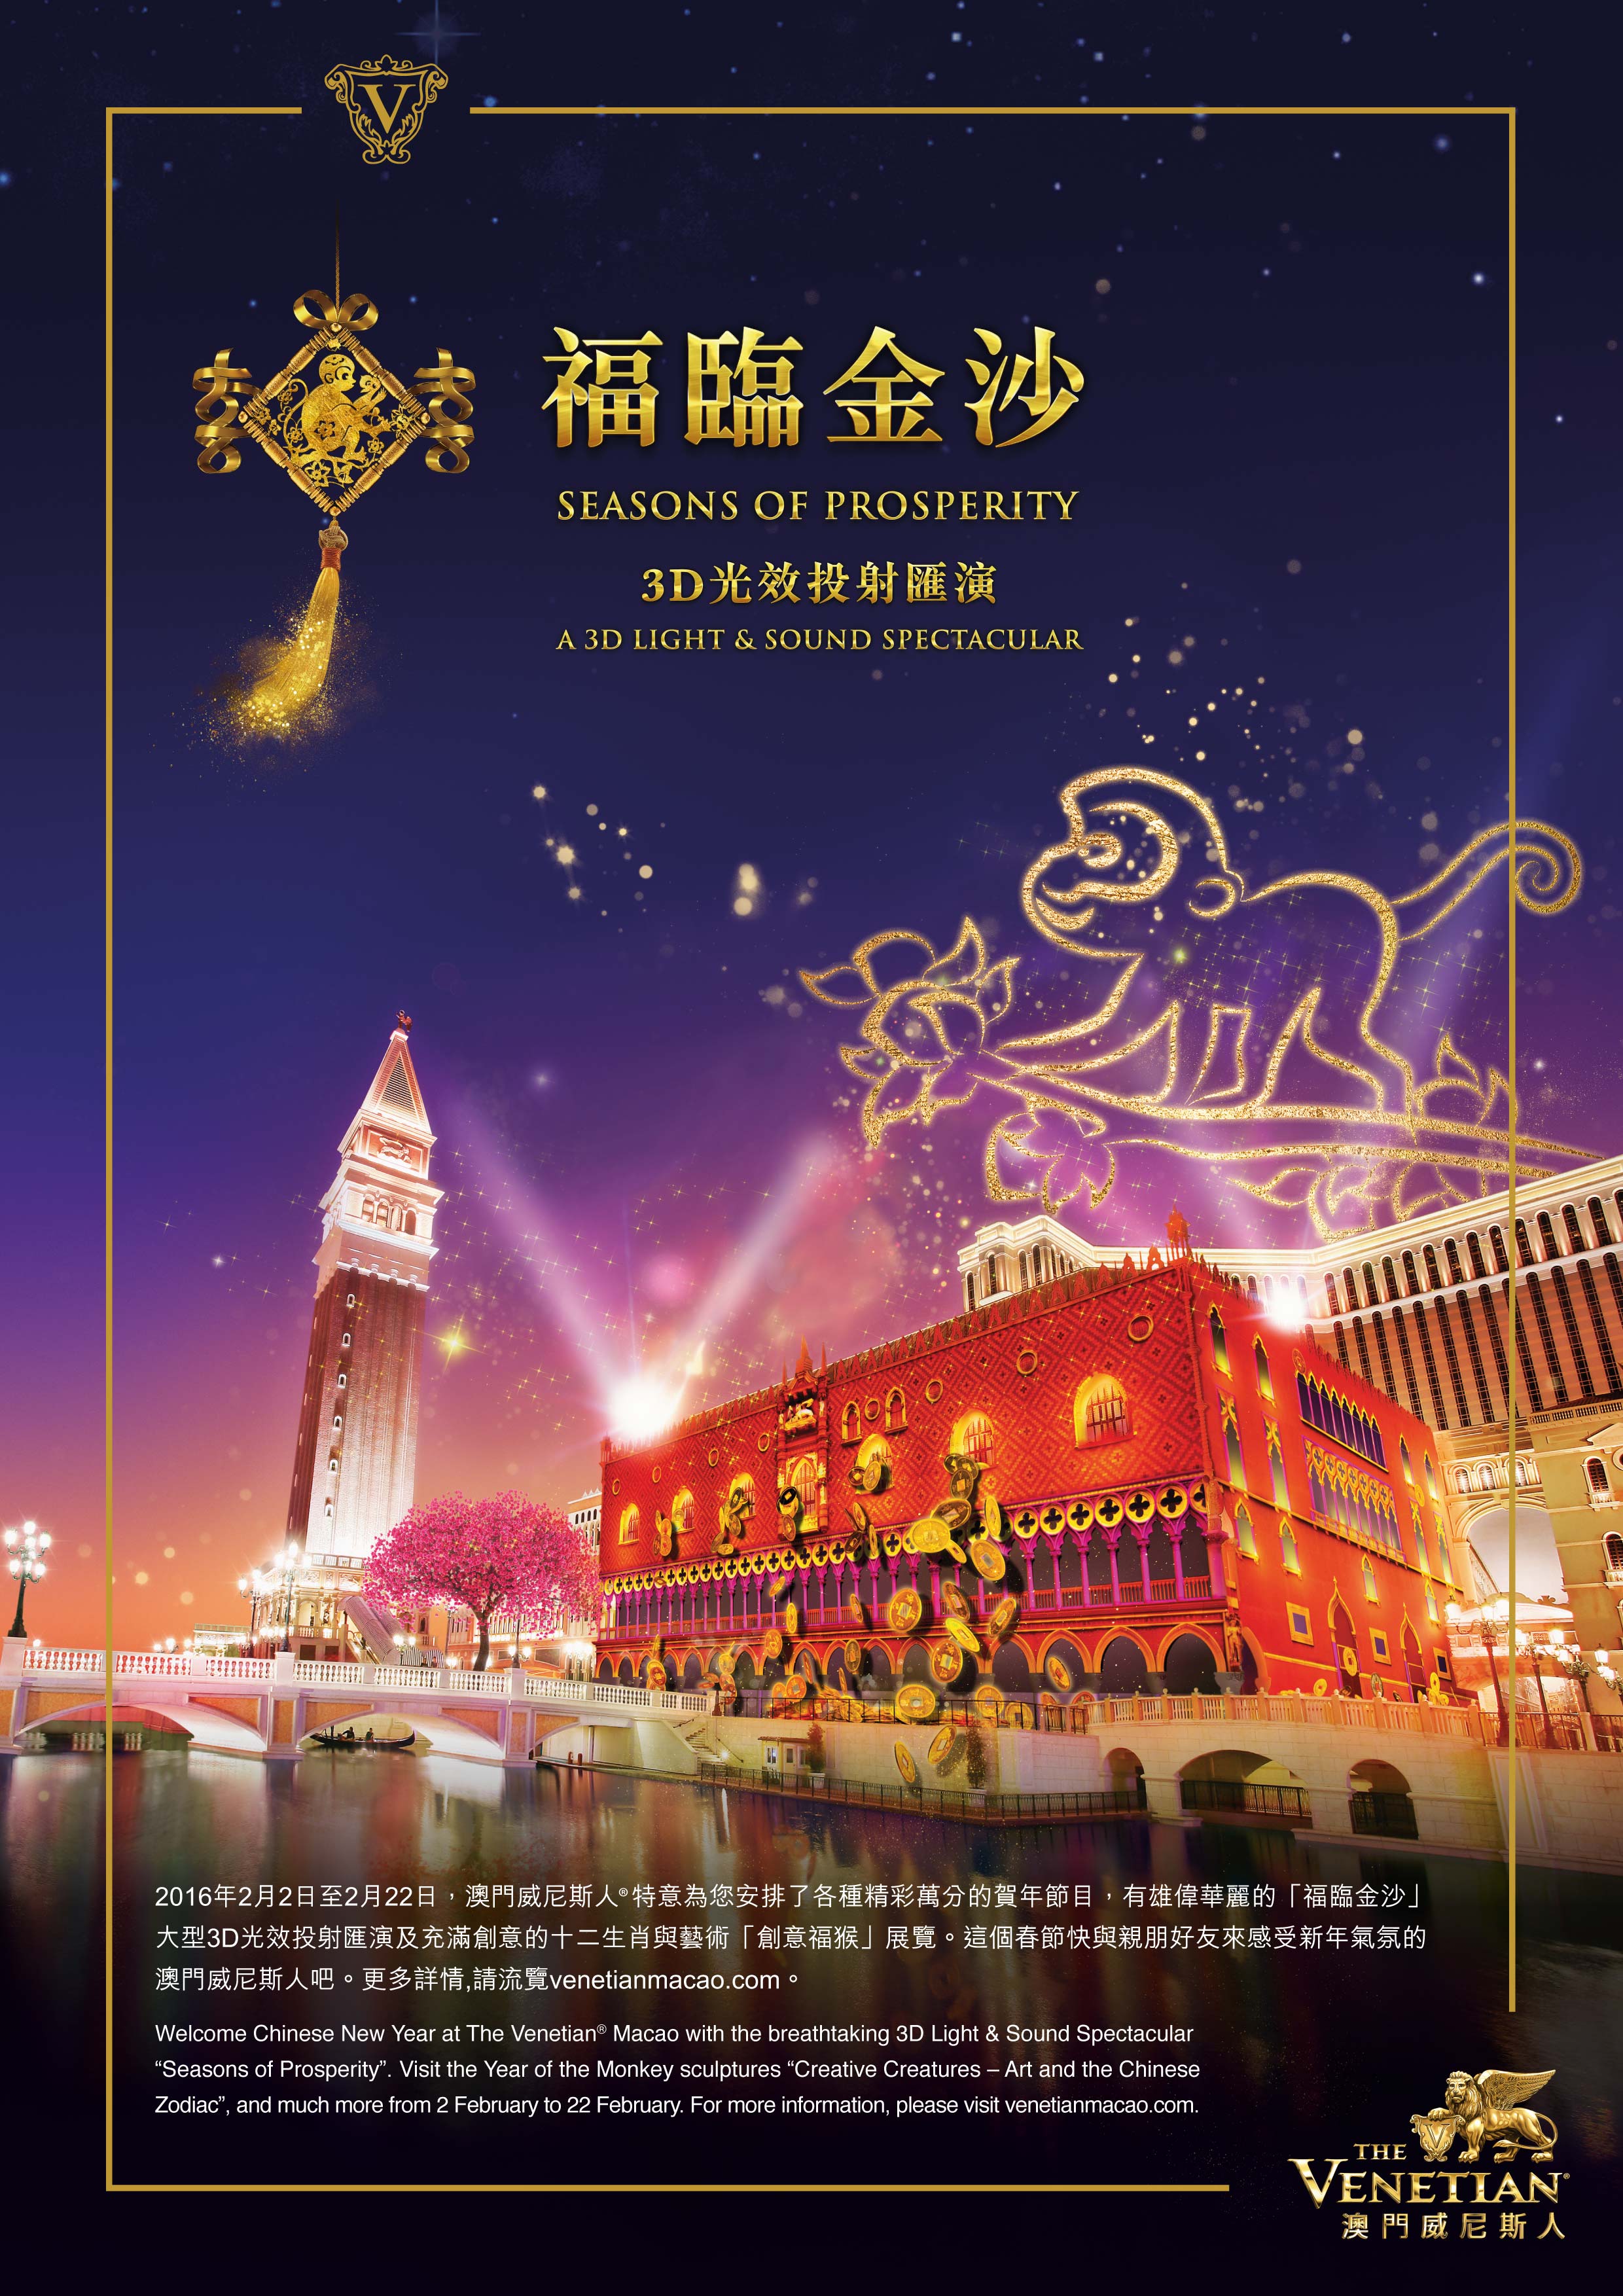 Seasons_of_Prosperity_at_The_Venetian_Macao_from_Feb._2_-_22_2016_1